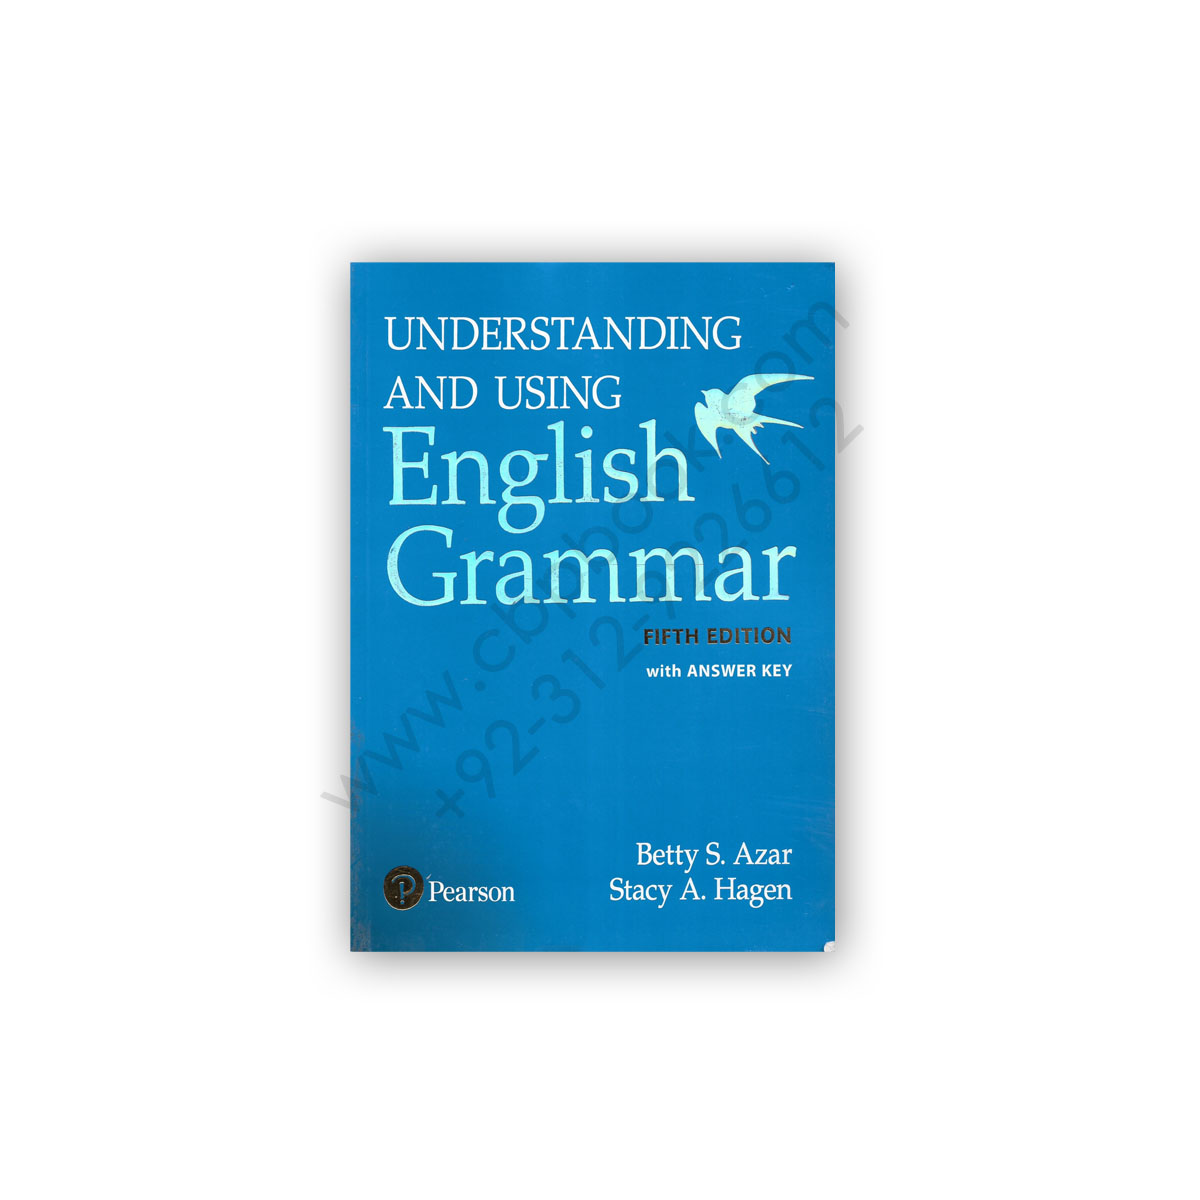 azar-hagen-understanding-using-english-grammar-5th-ed-pearson-cbpbook